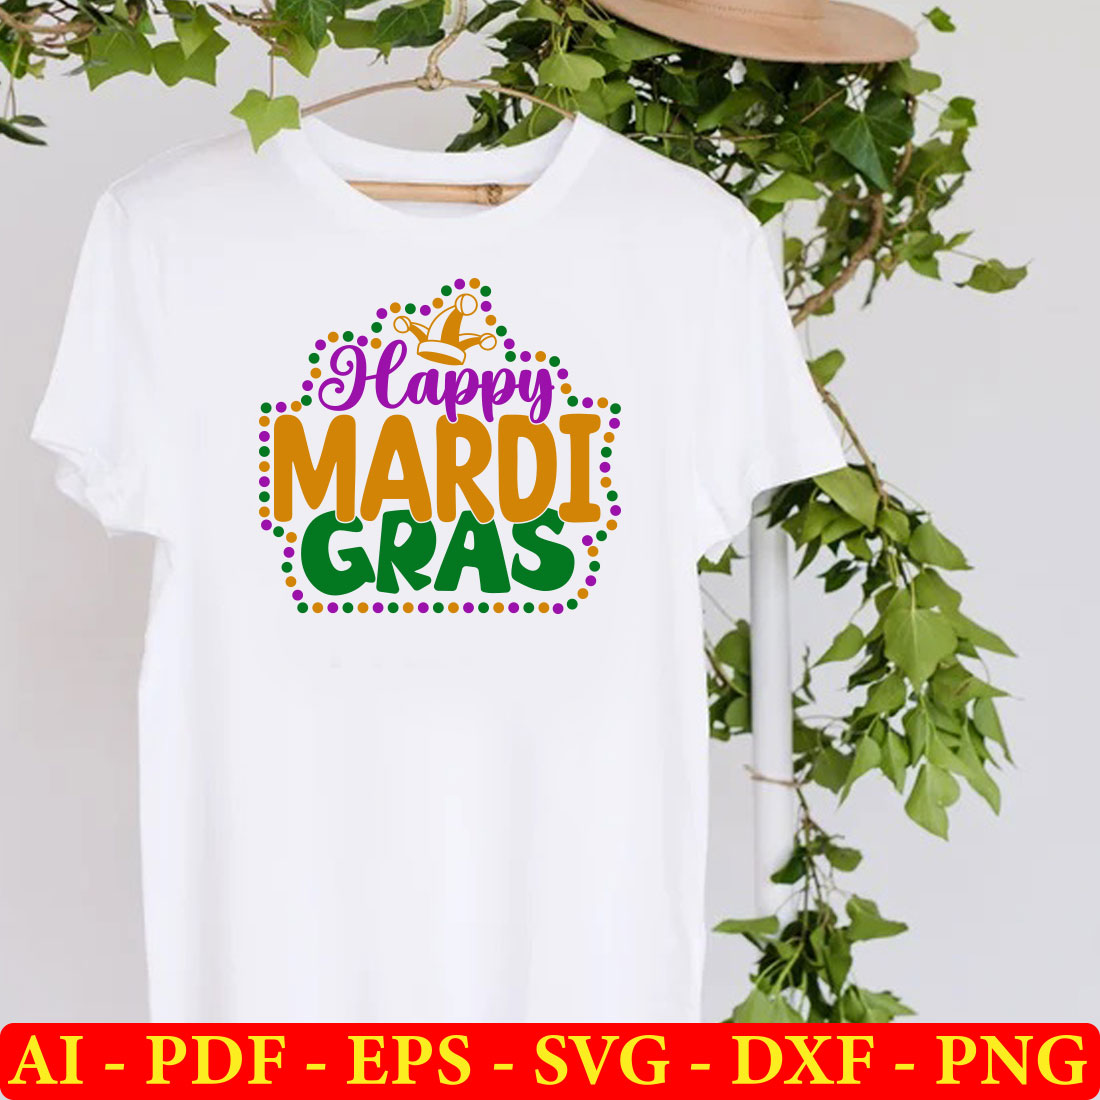 Happy mardi gras t - shirt on a hanger.